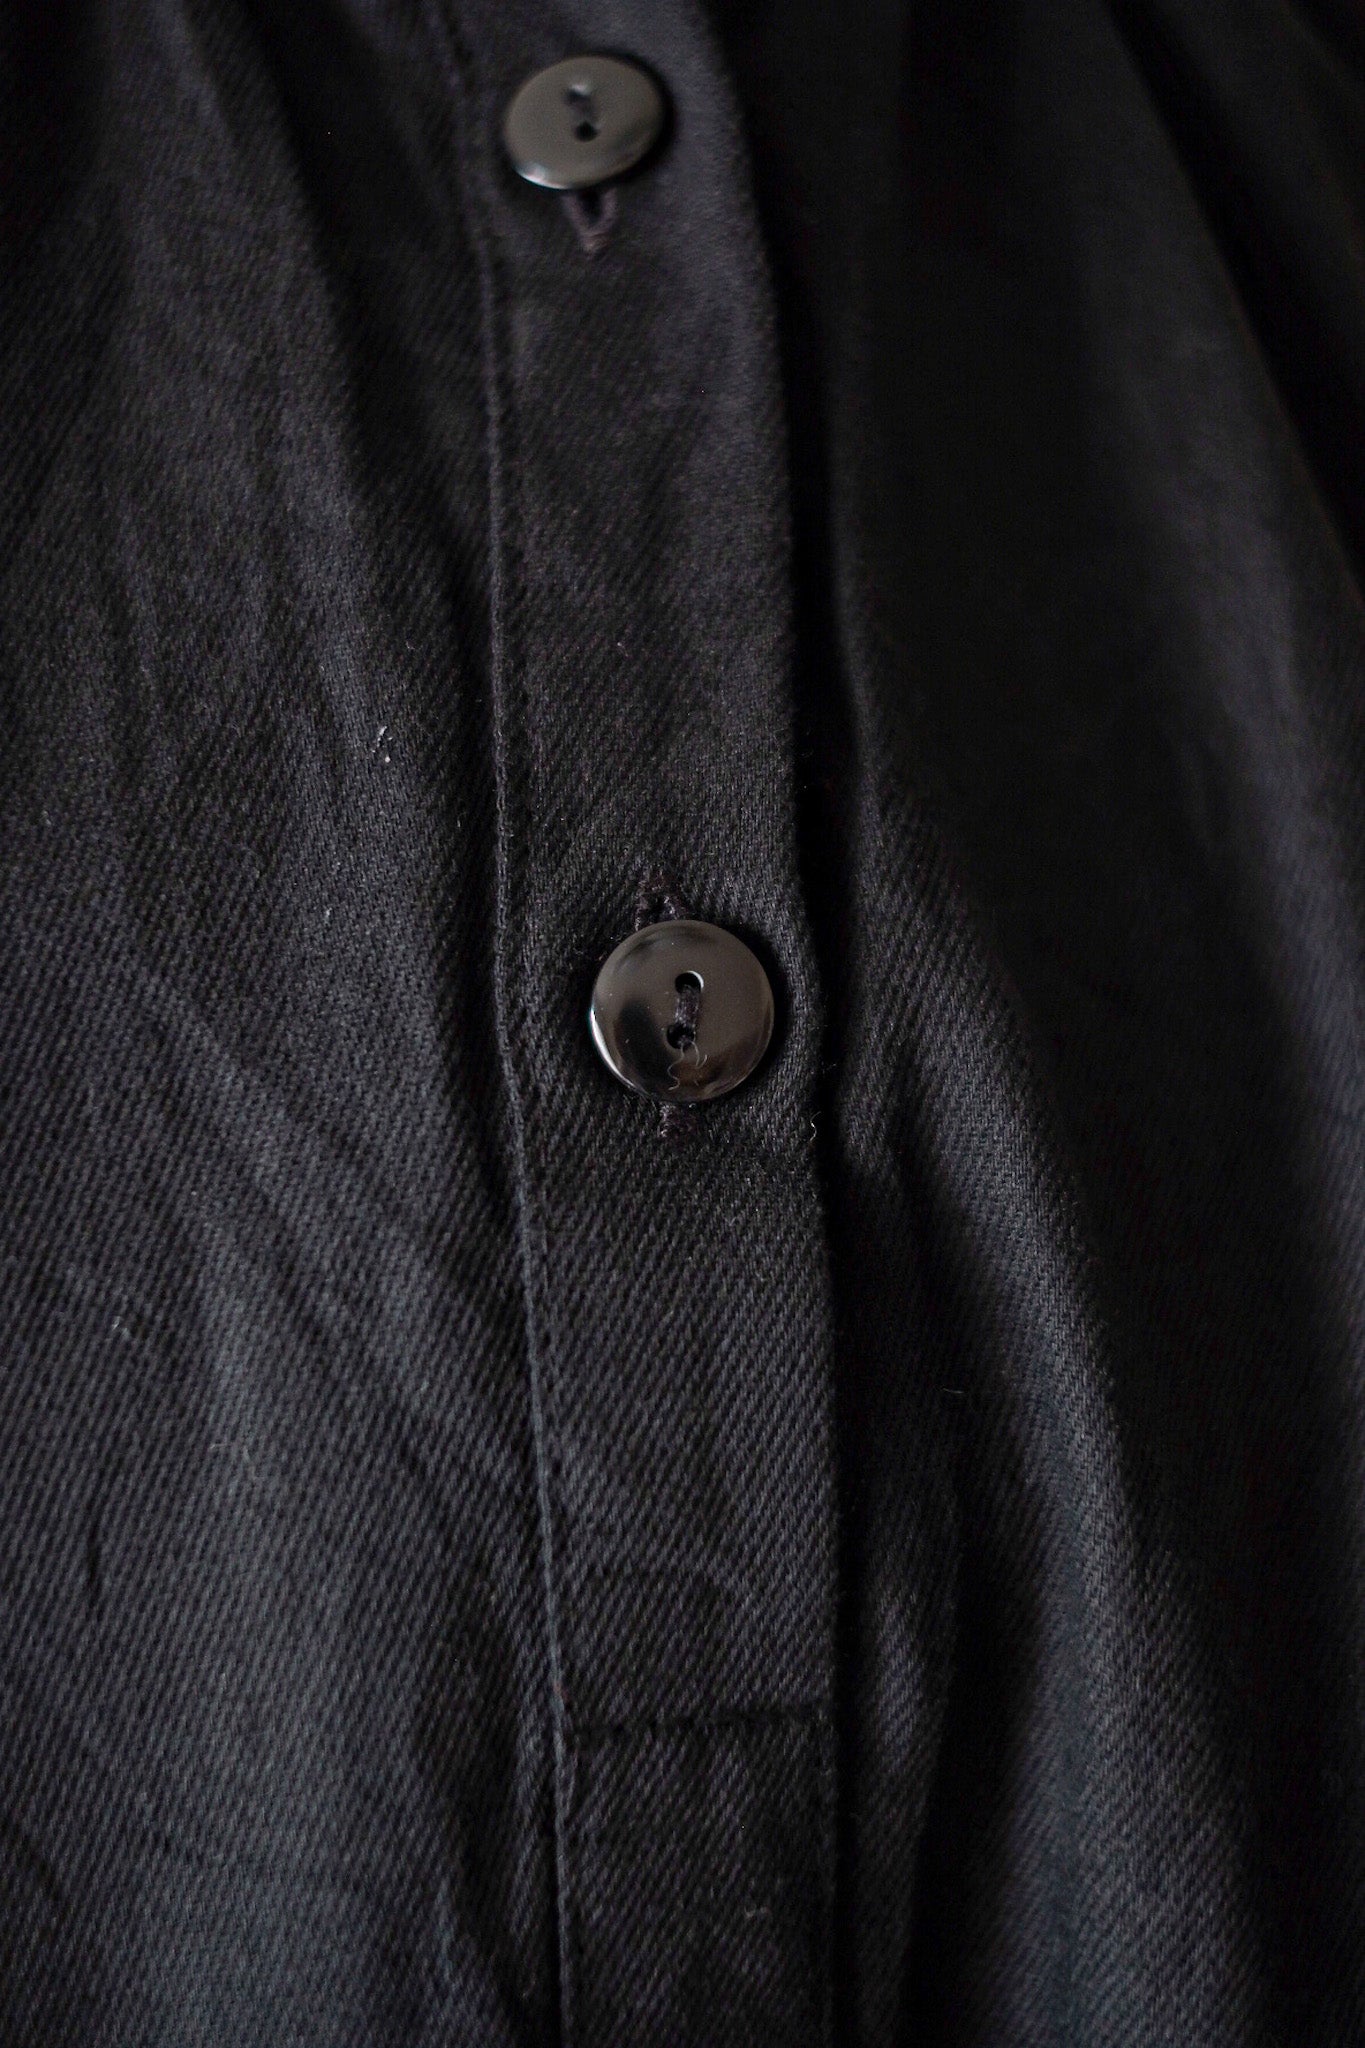 [~ 60's] French Vintage Black Cotton Smock